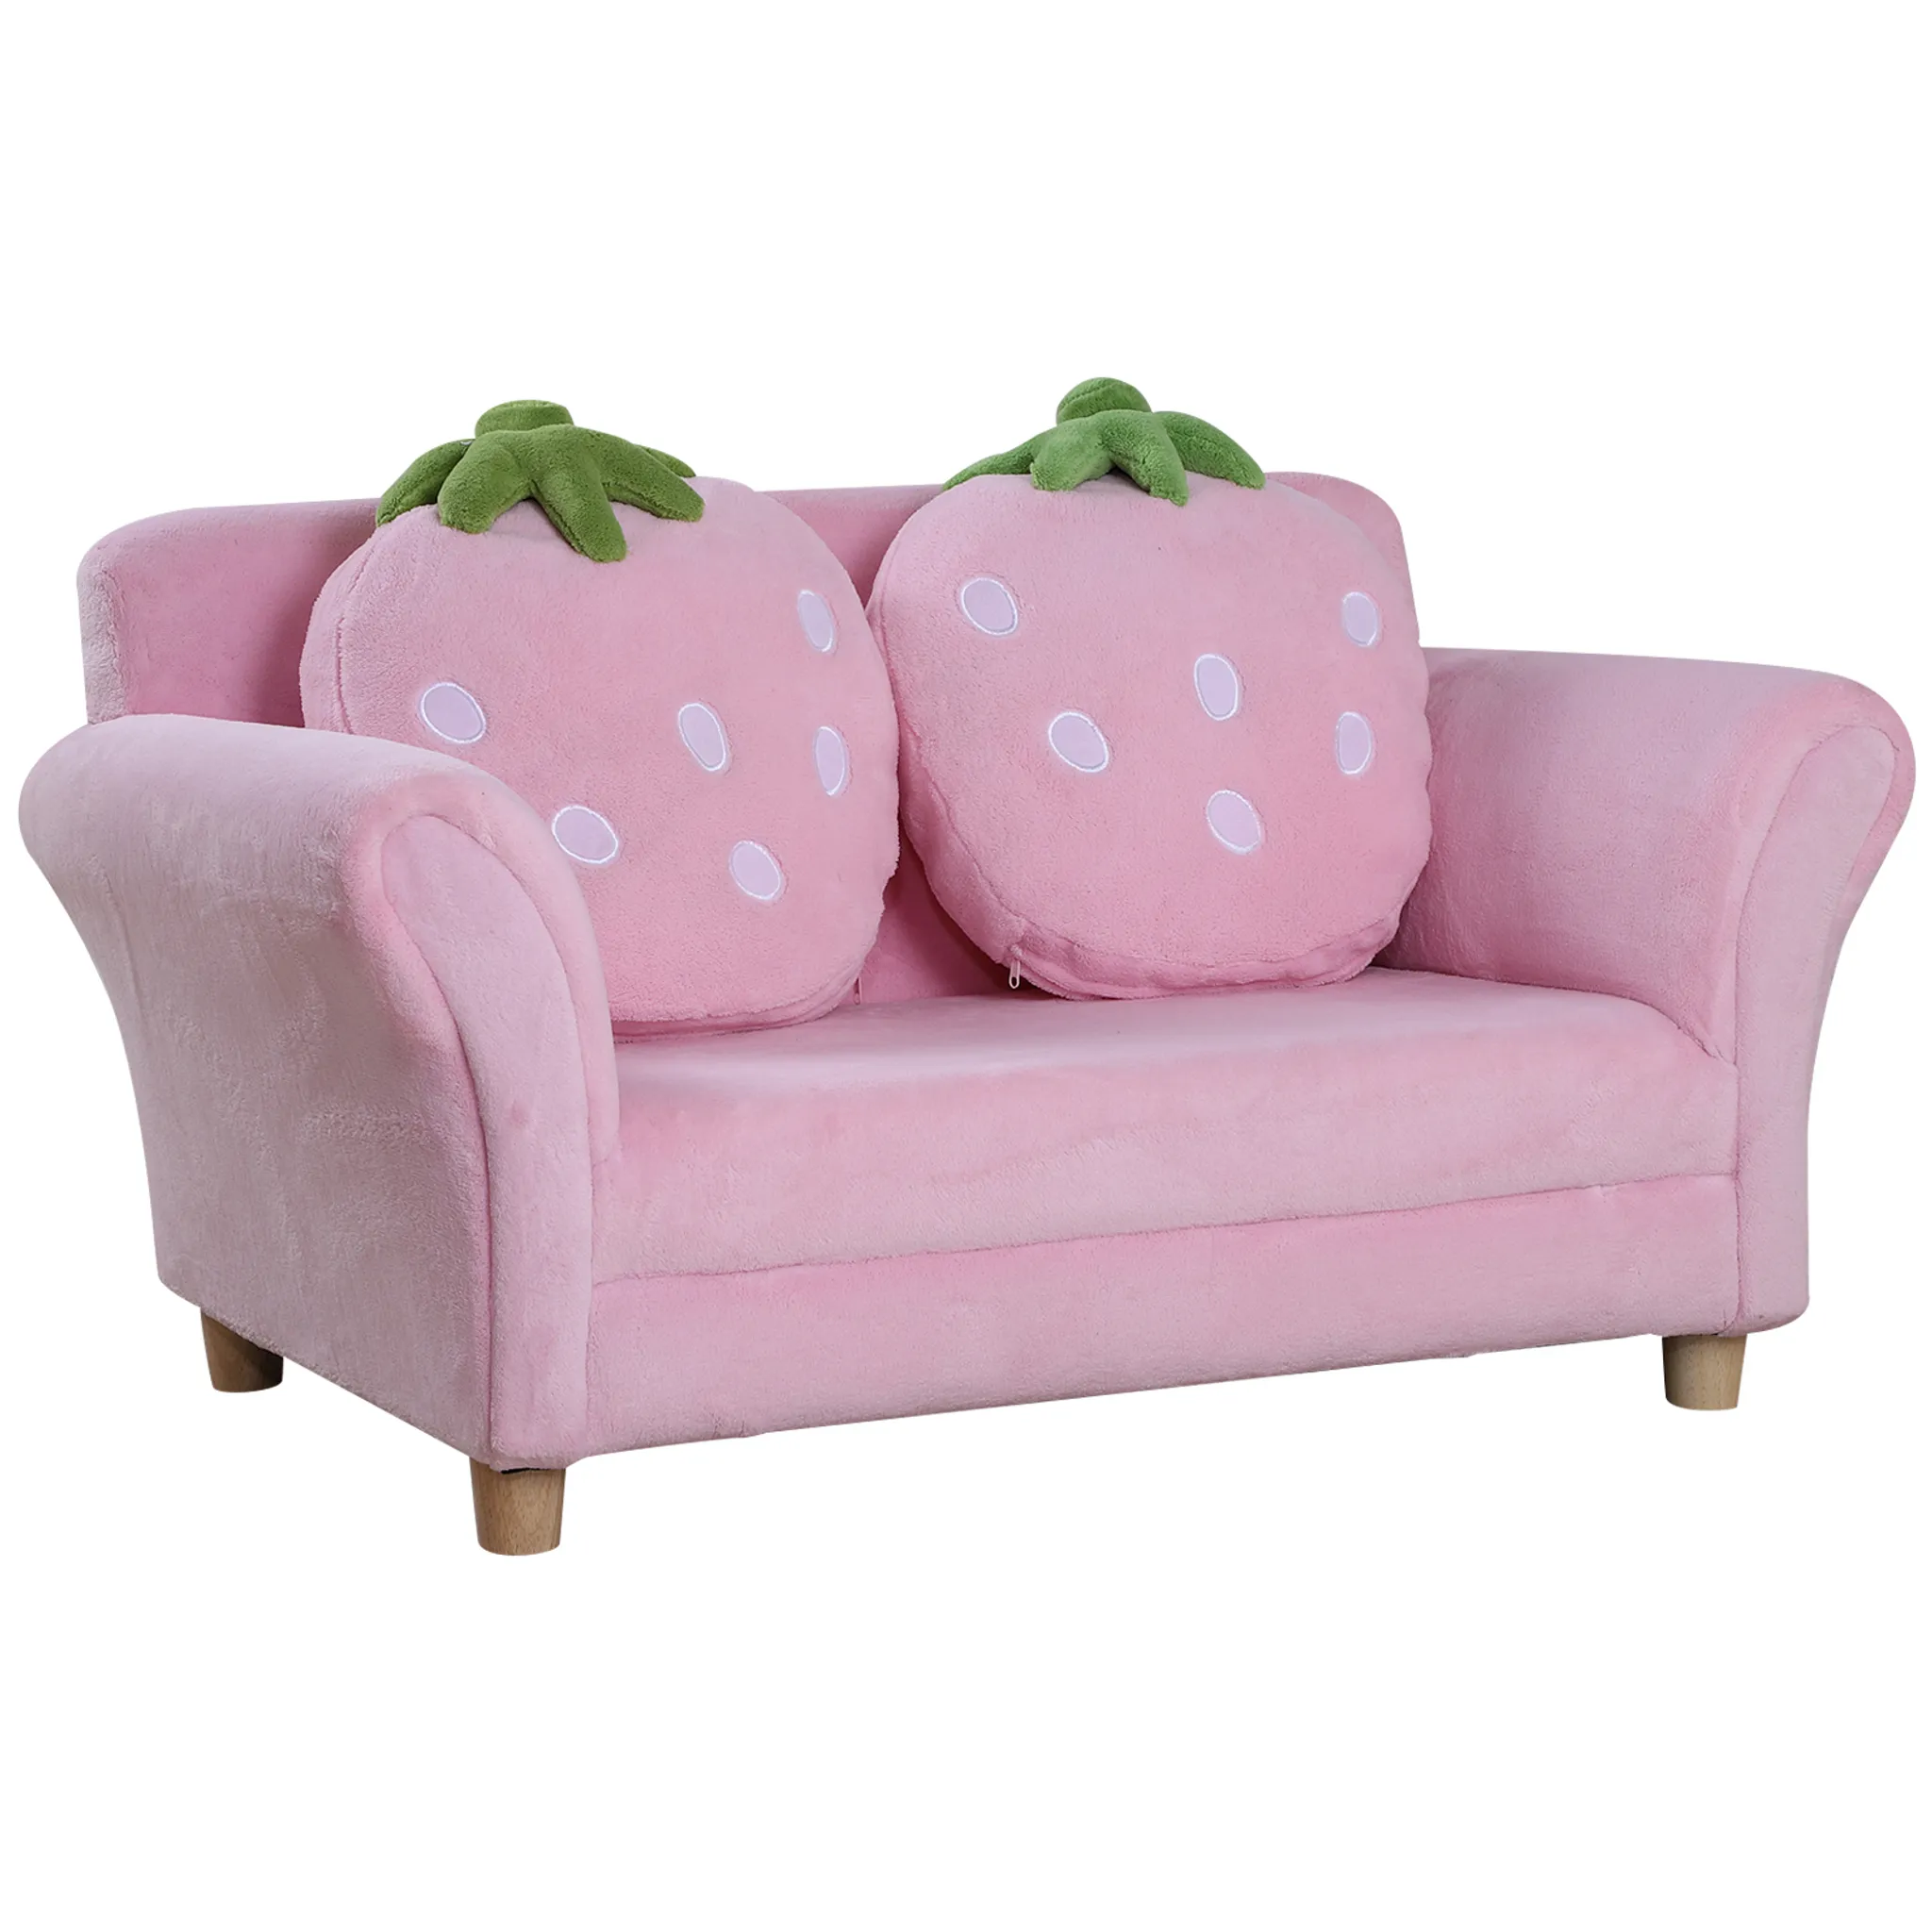 HOMCOM Kindersofa Kindersessel Sofa Couch